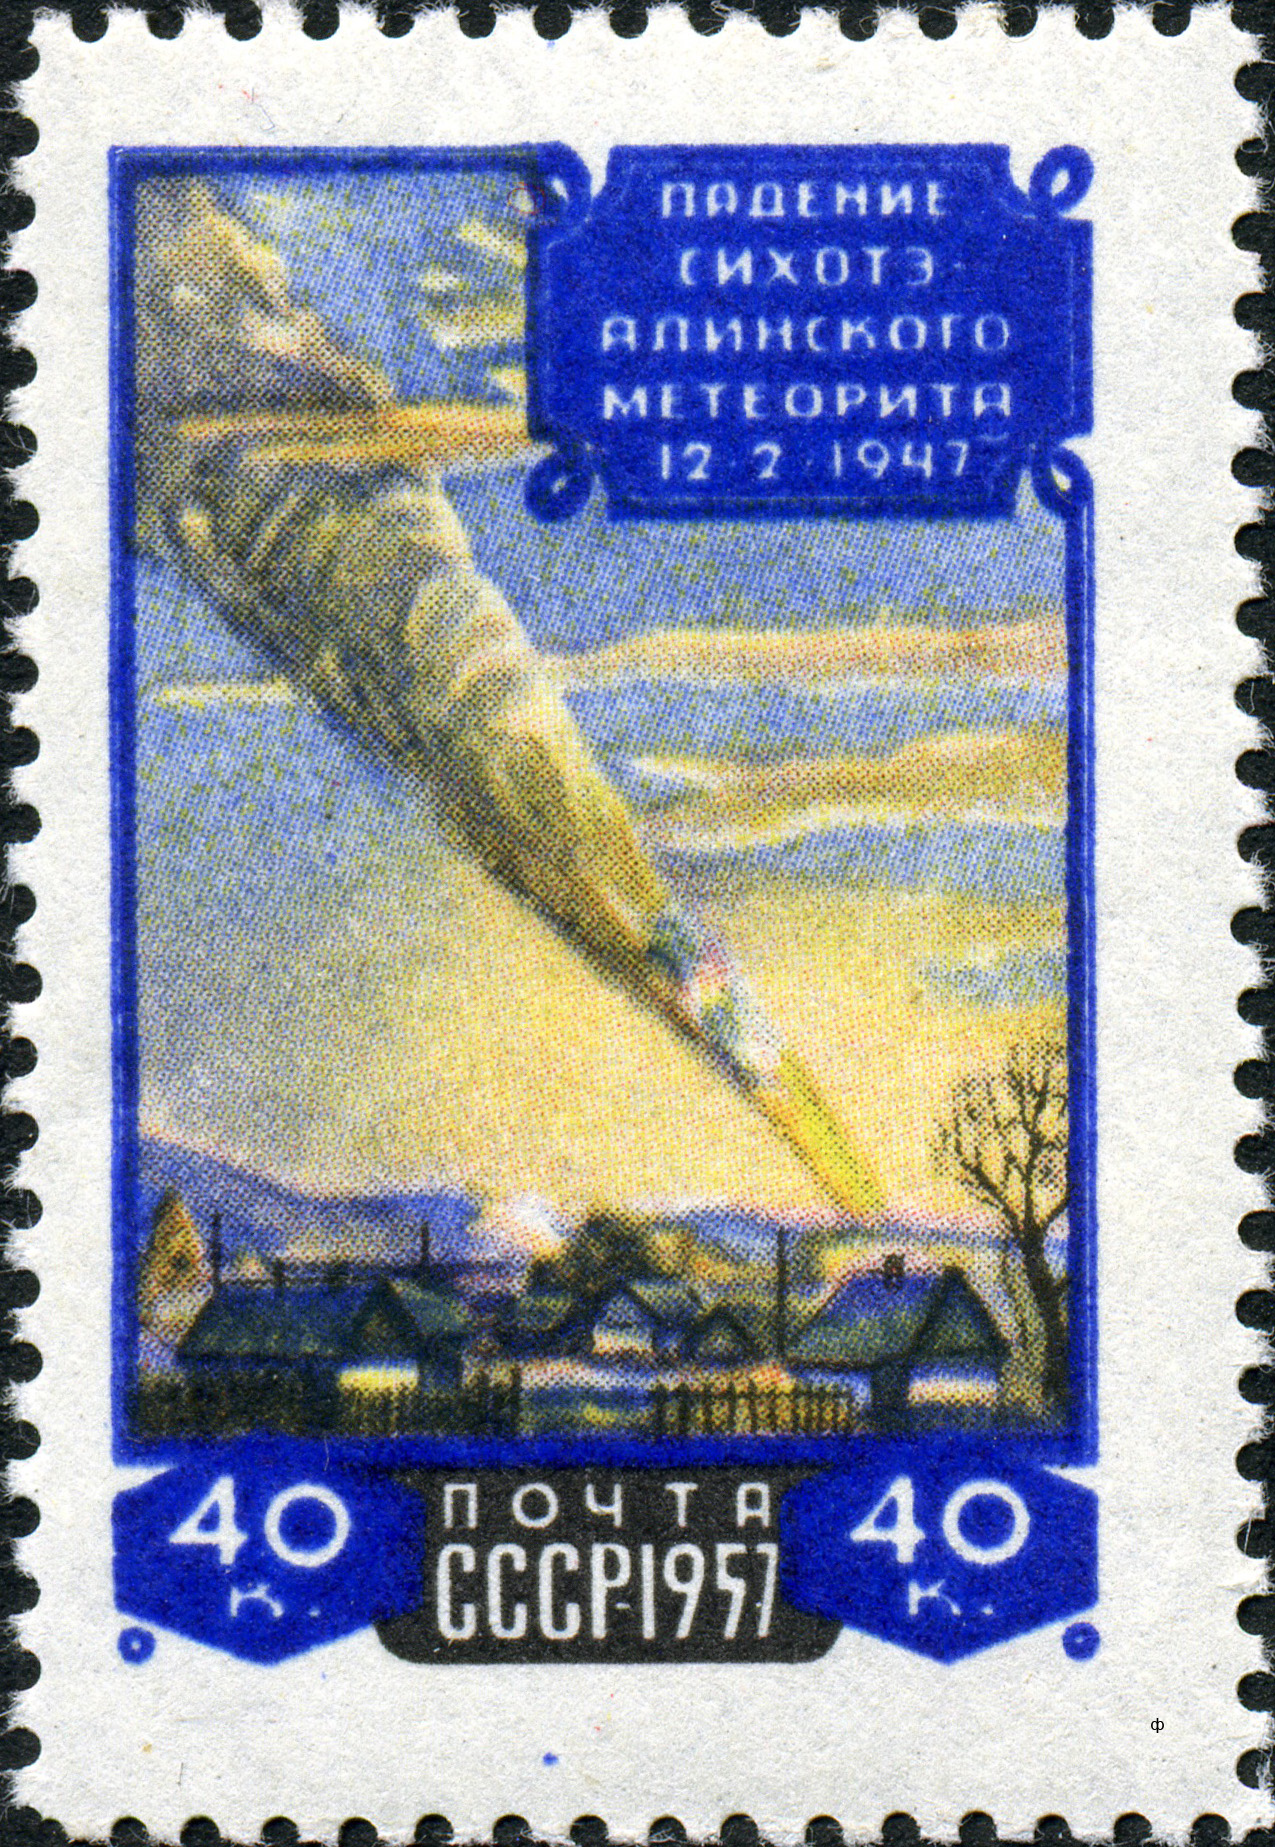 Sikhote-Alin_stamp_1957.jpg